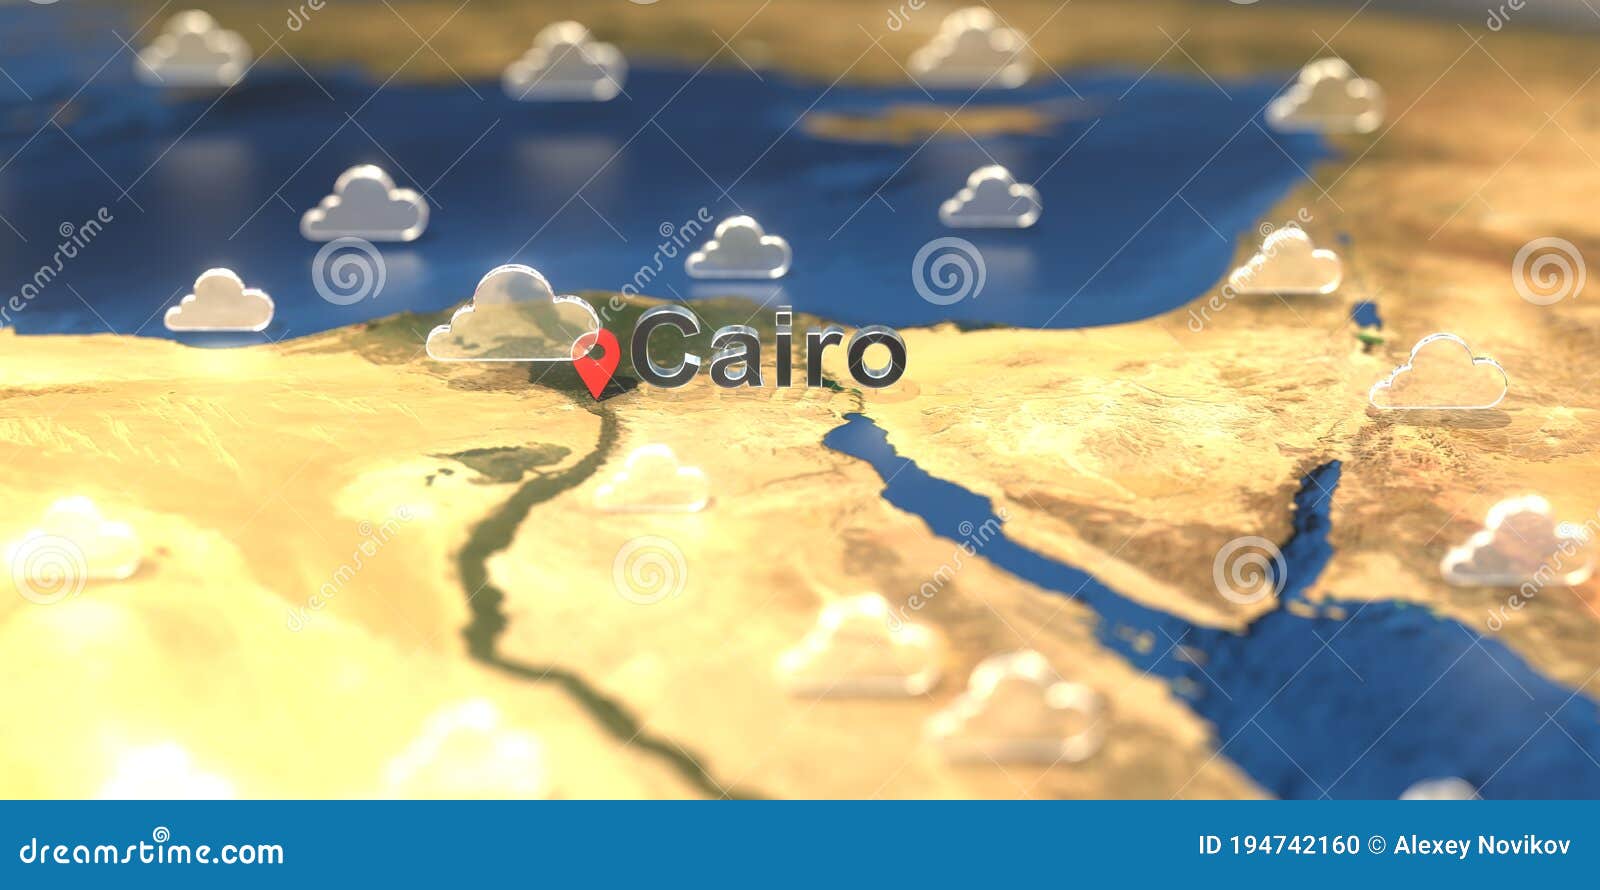 Cairo weather